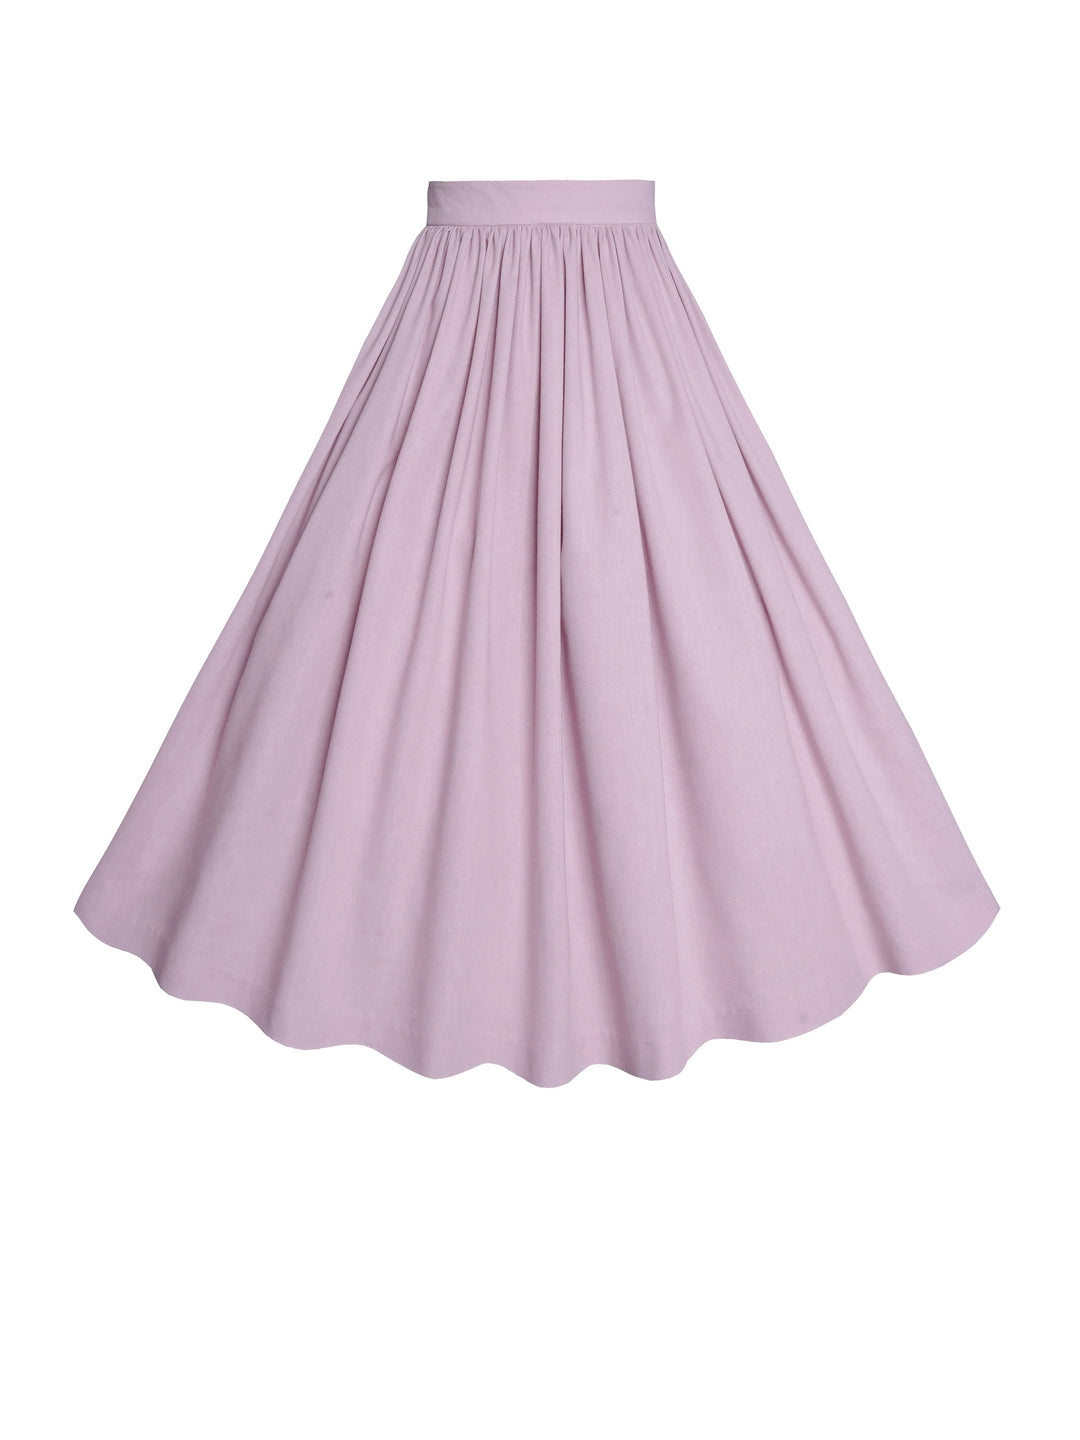 MTO - Lola Skirt in Lilac Purple Linen